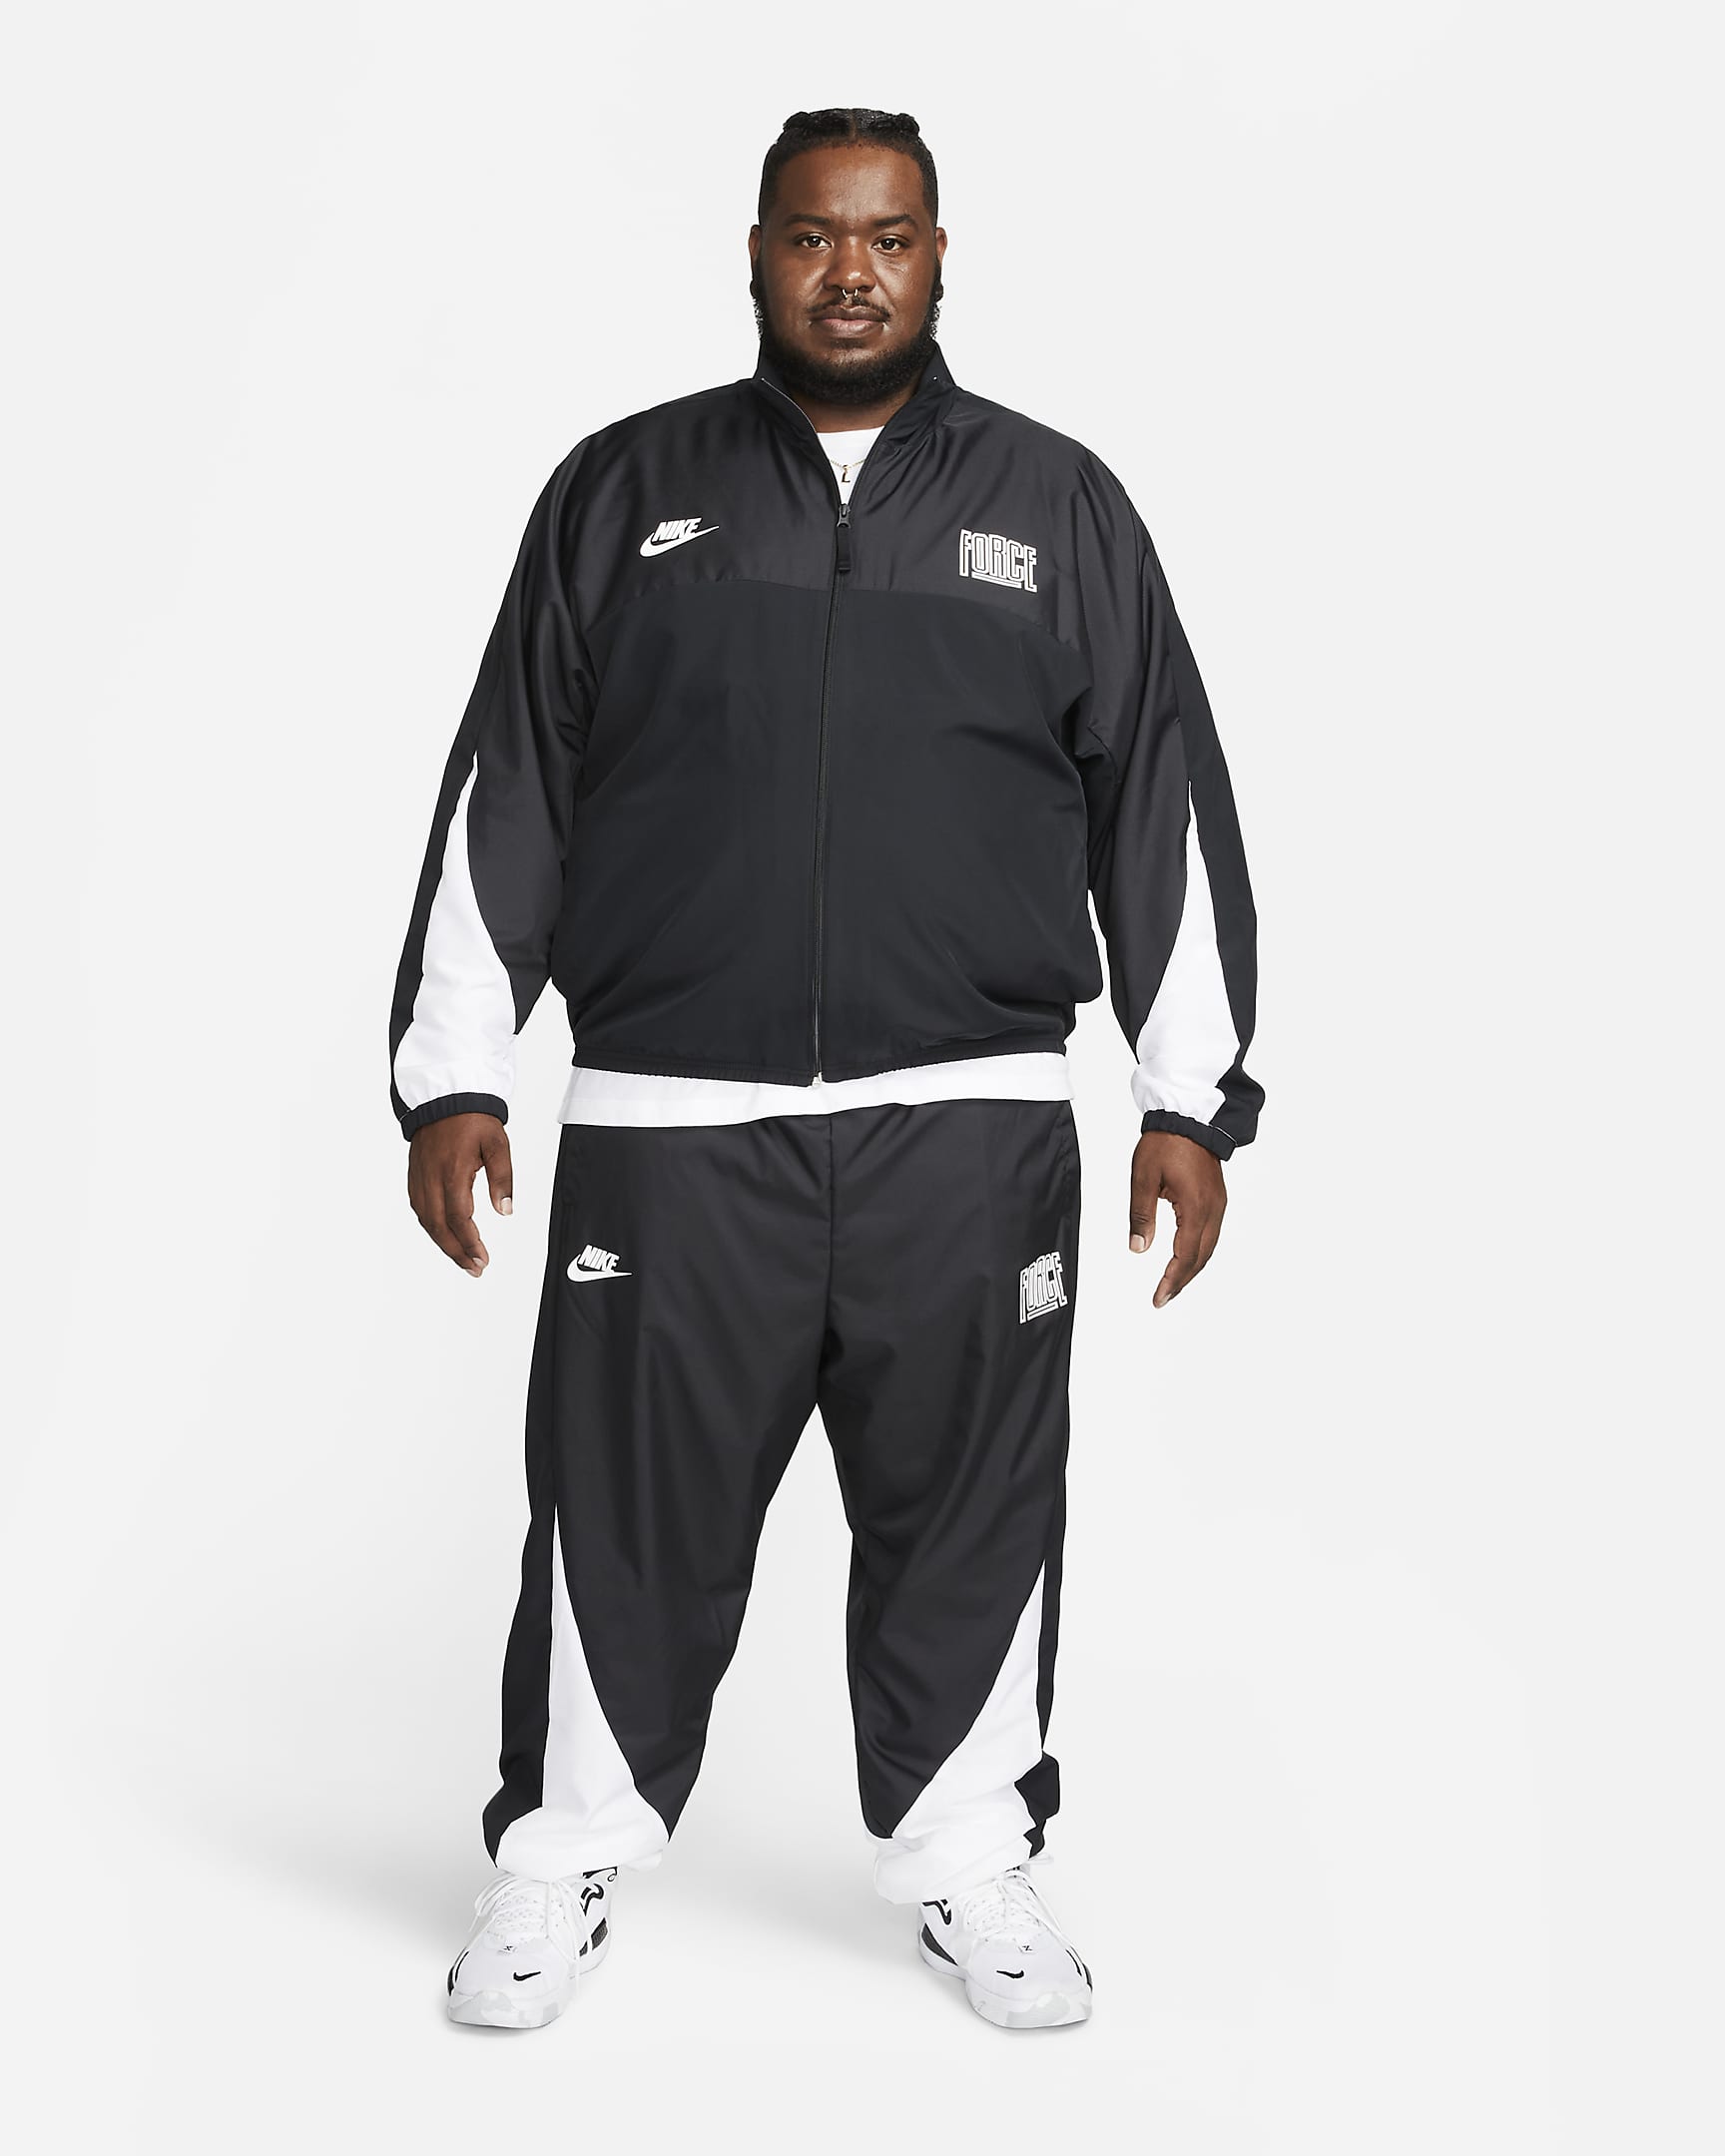 Nike Starting 5 Men's Basketball Jacket. Nike ZA